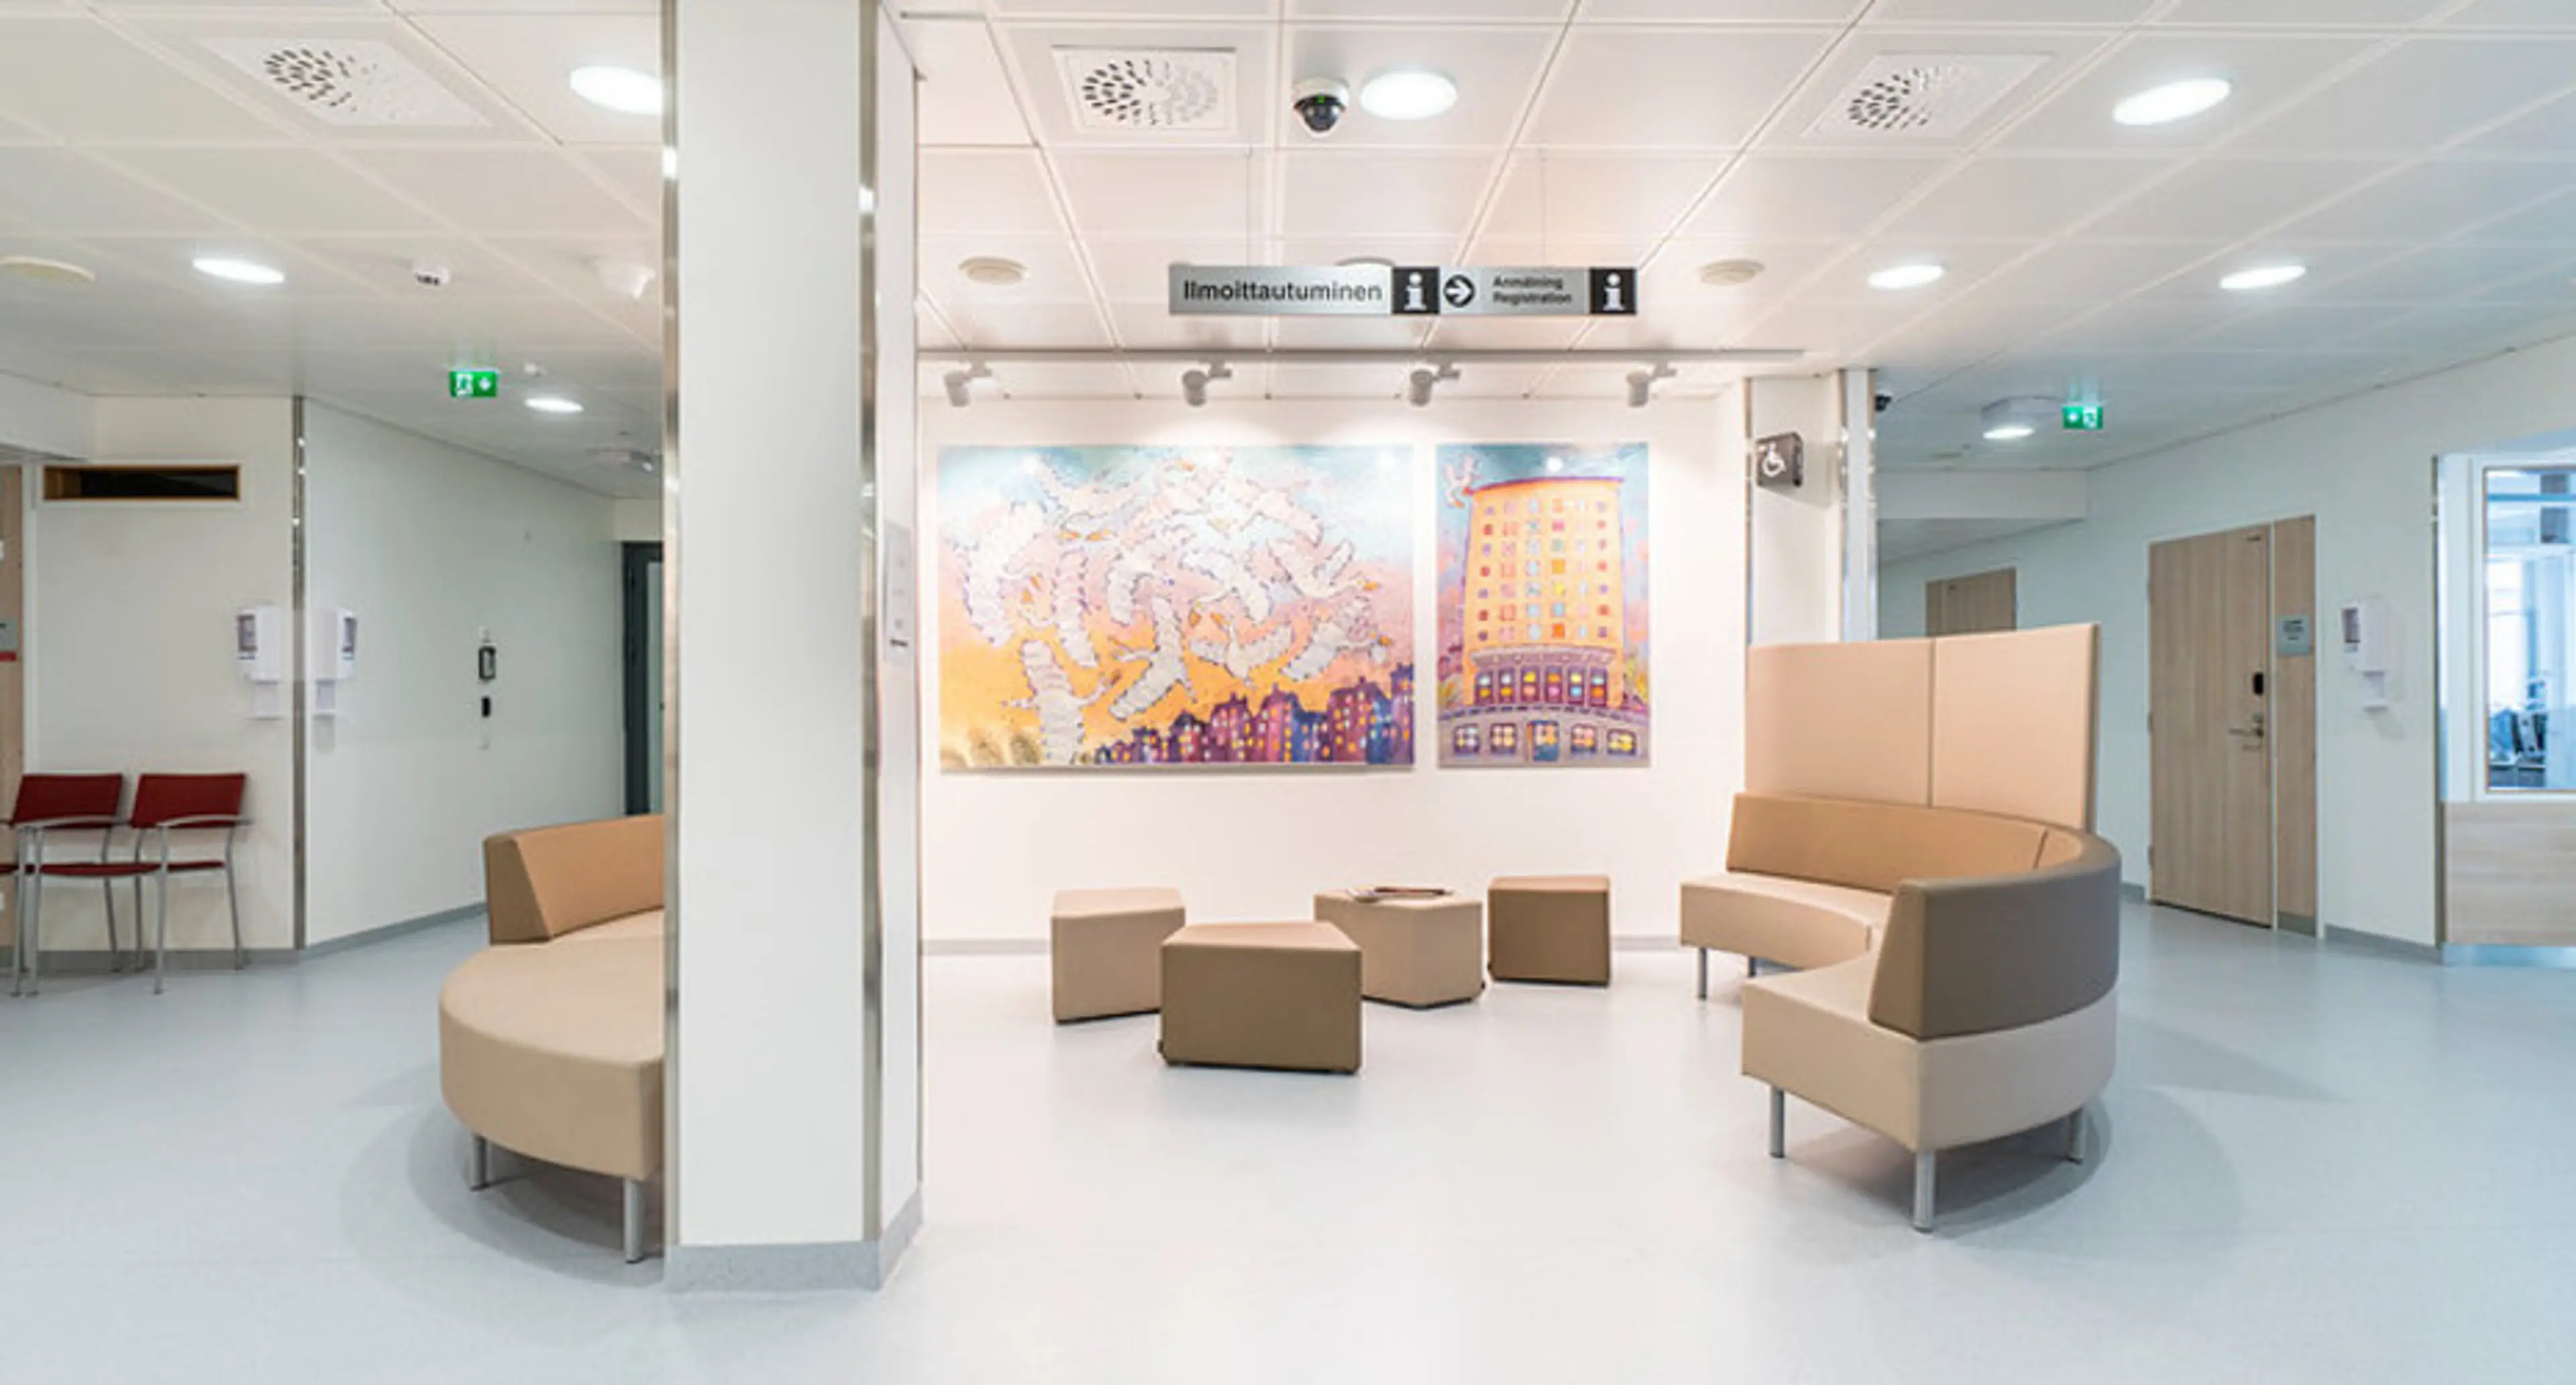 Venteværelse på sykehus med antibakterielle møbler.